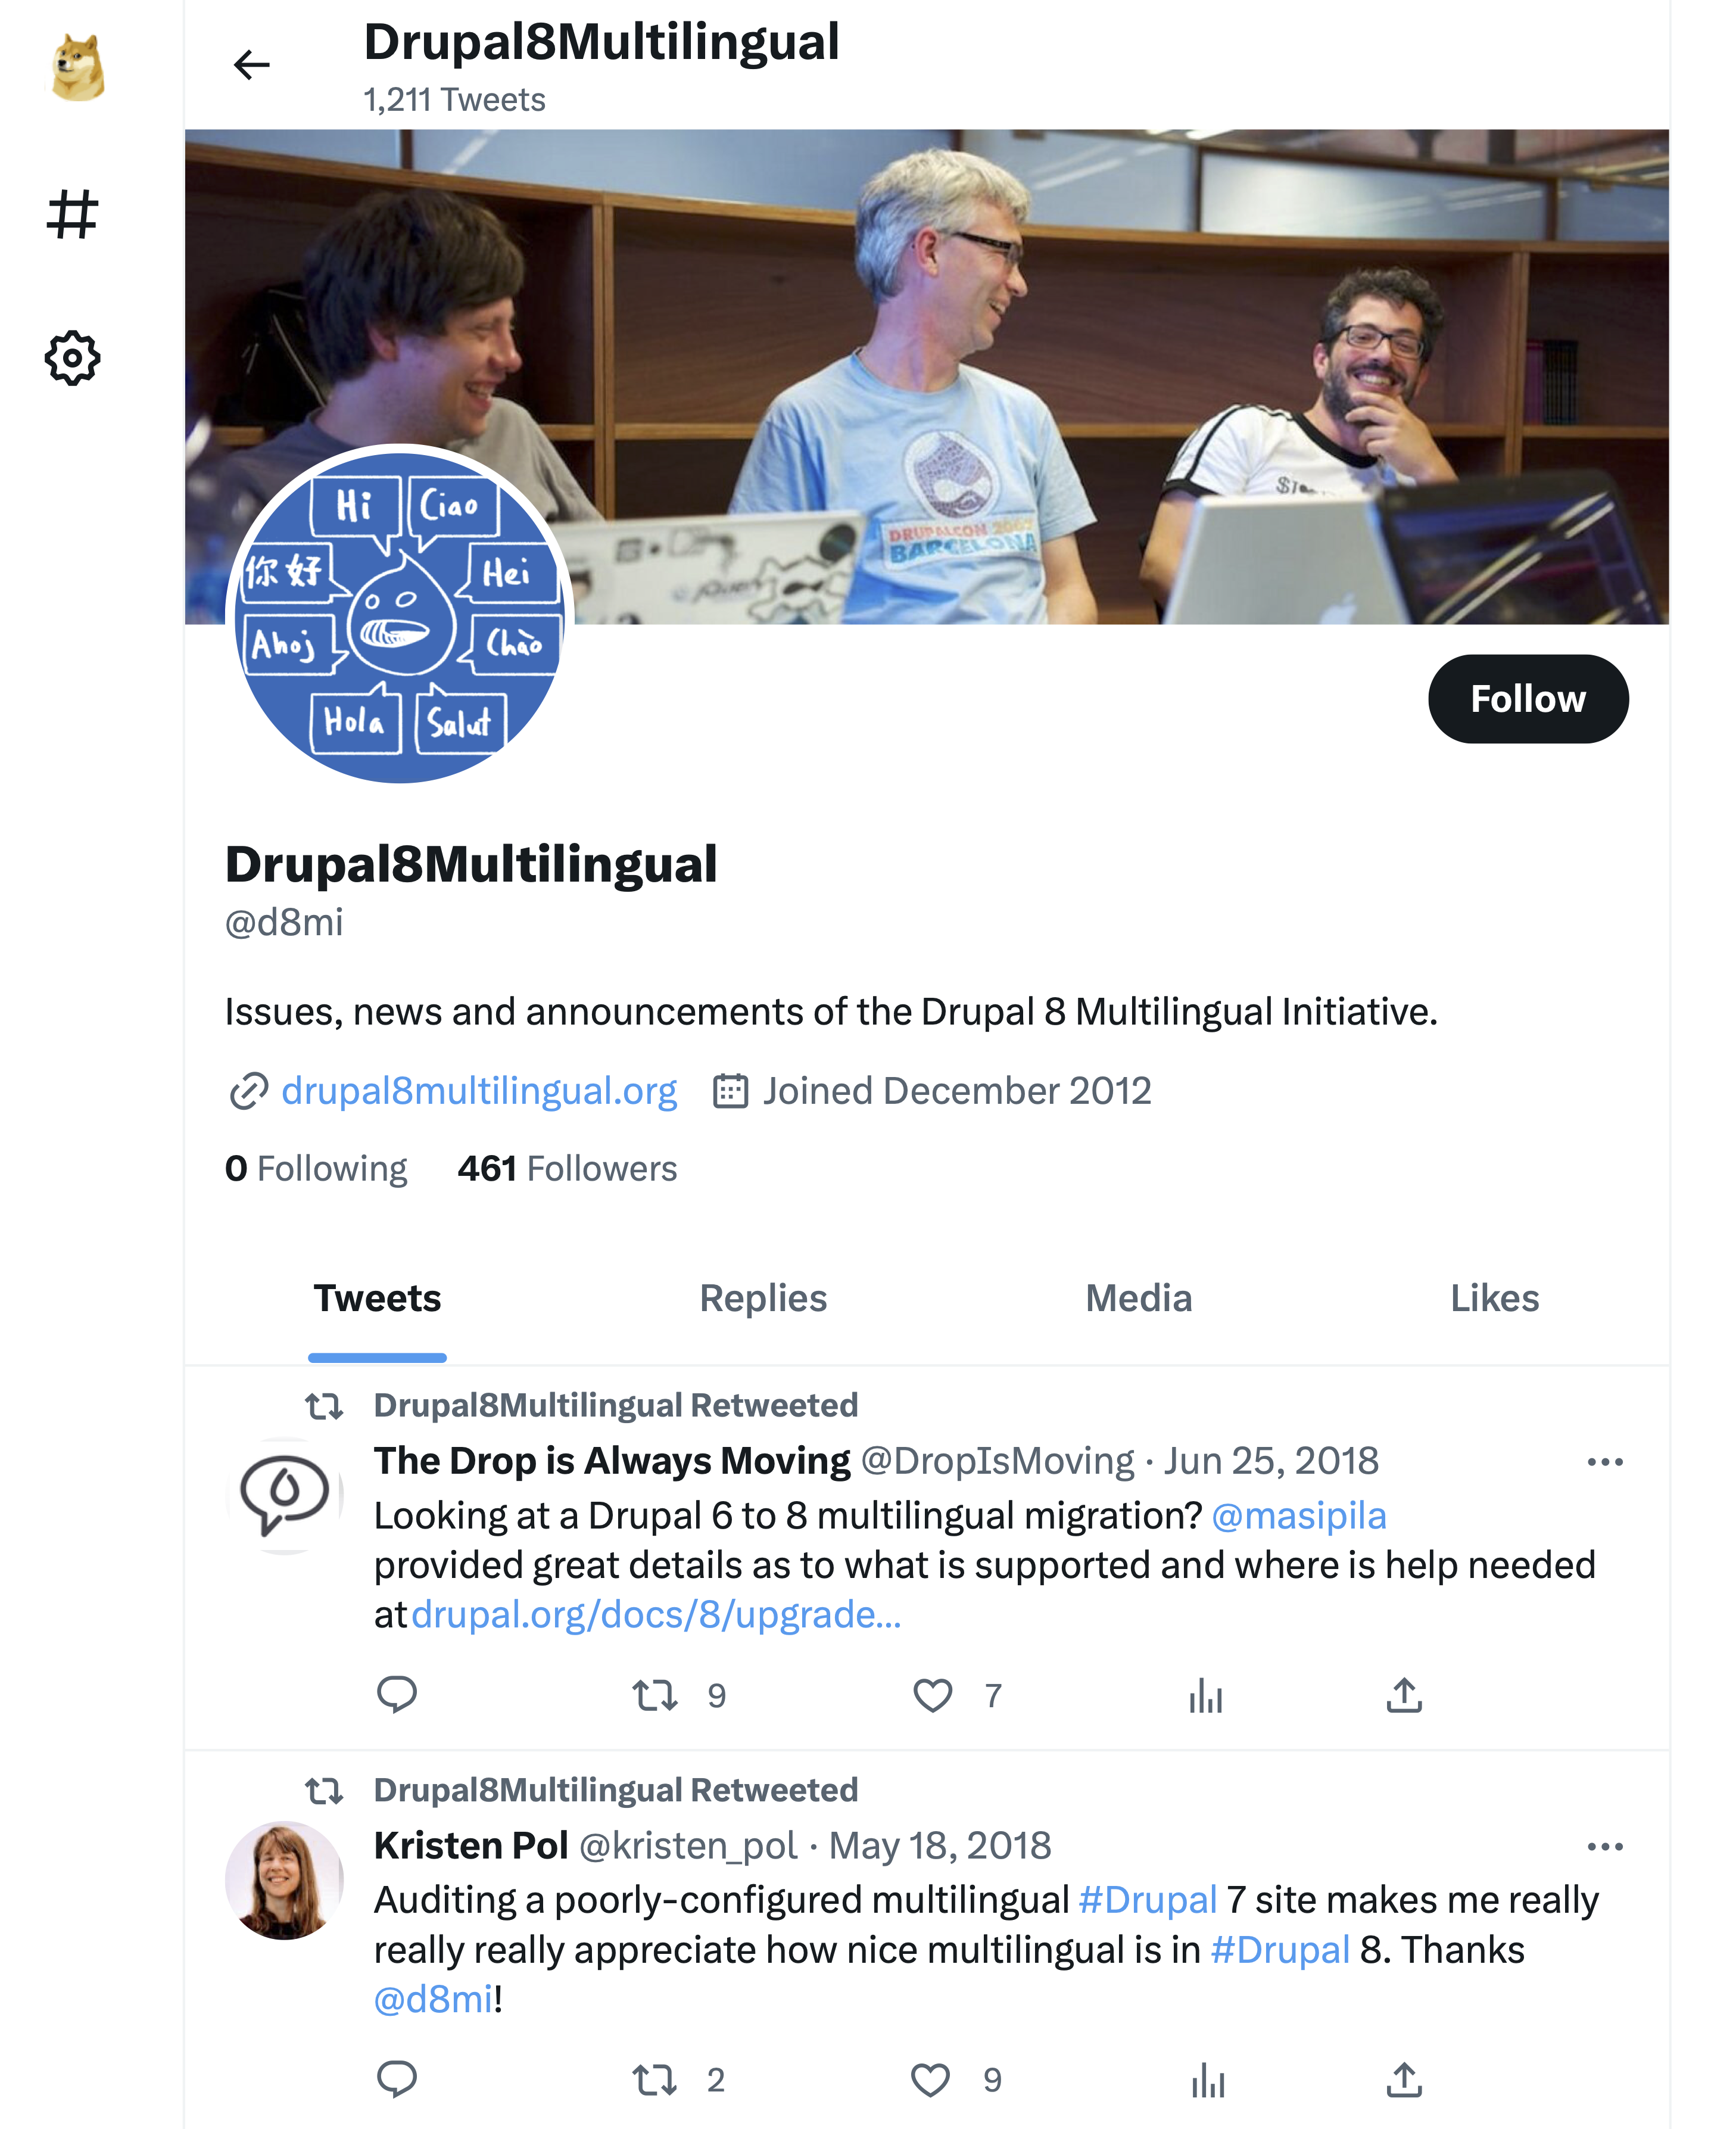 Drupal8Multilingual Twitter account for D8MI including a Tweet from Kristen Pol in 2018